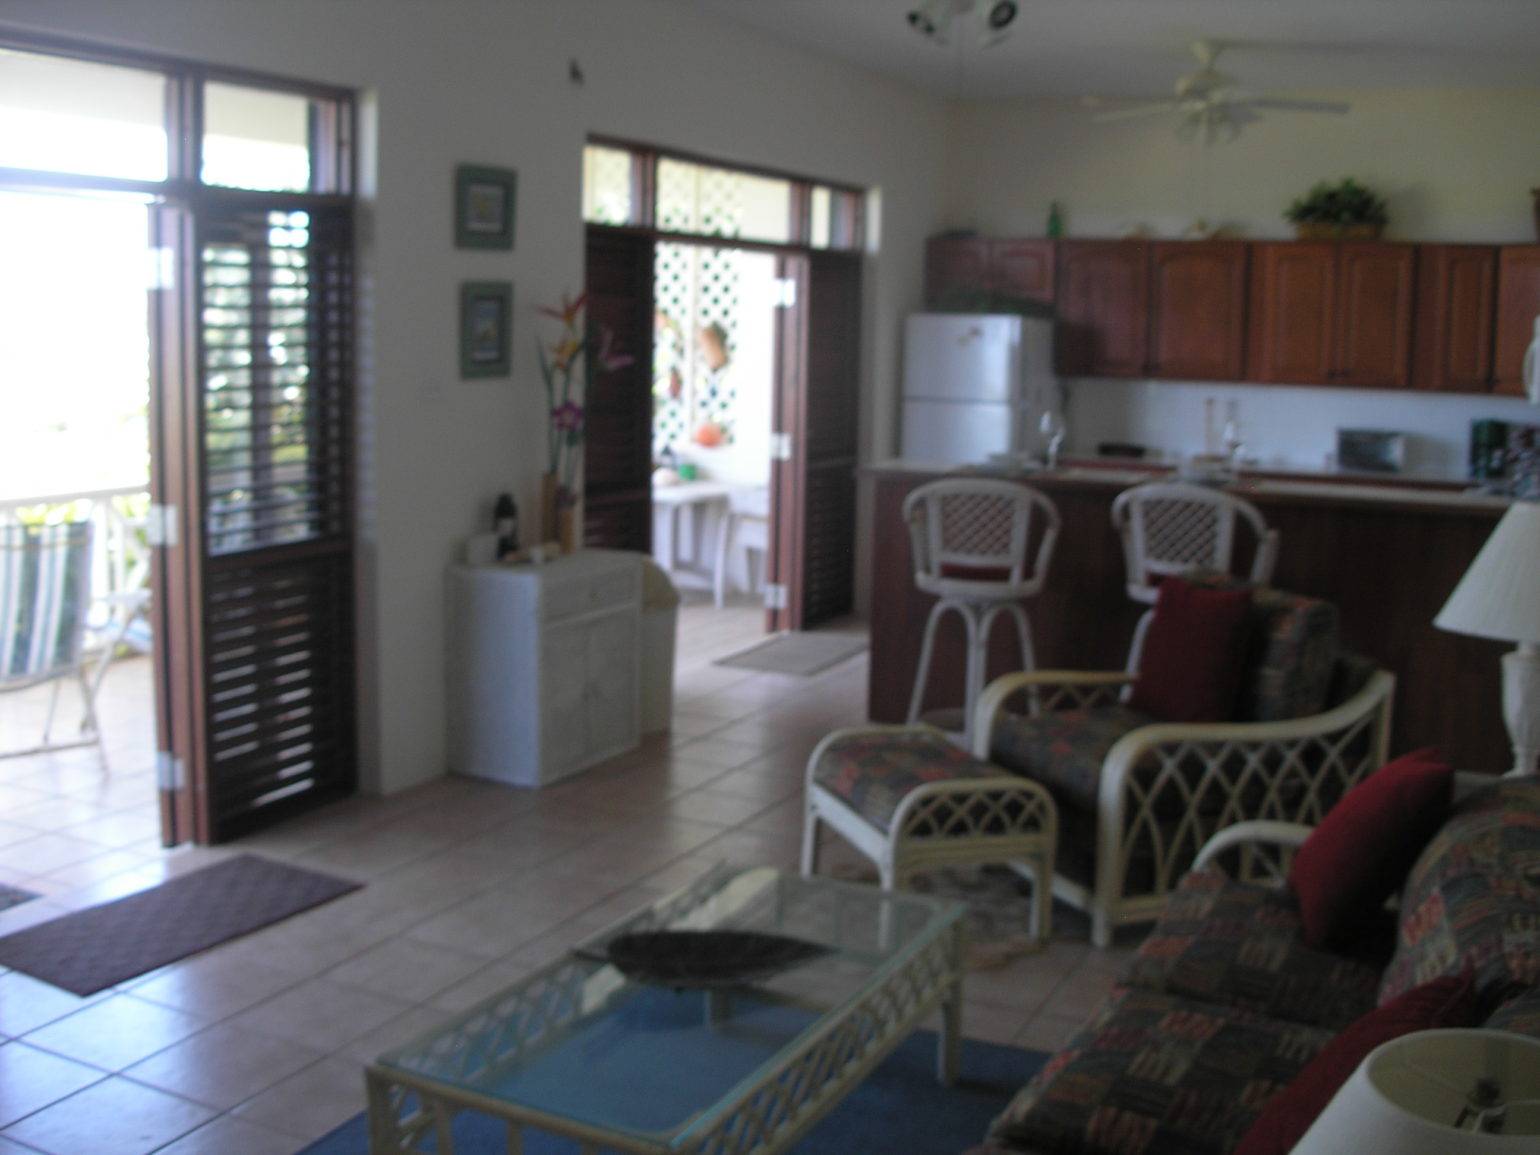 St Kitts Real Estate For Sale, St Kitts Villa For Sale